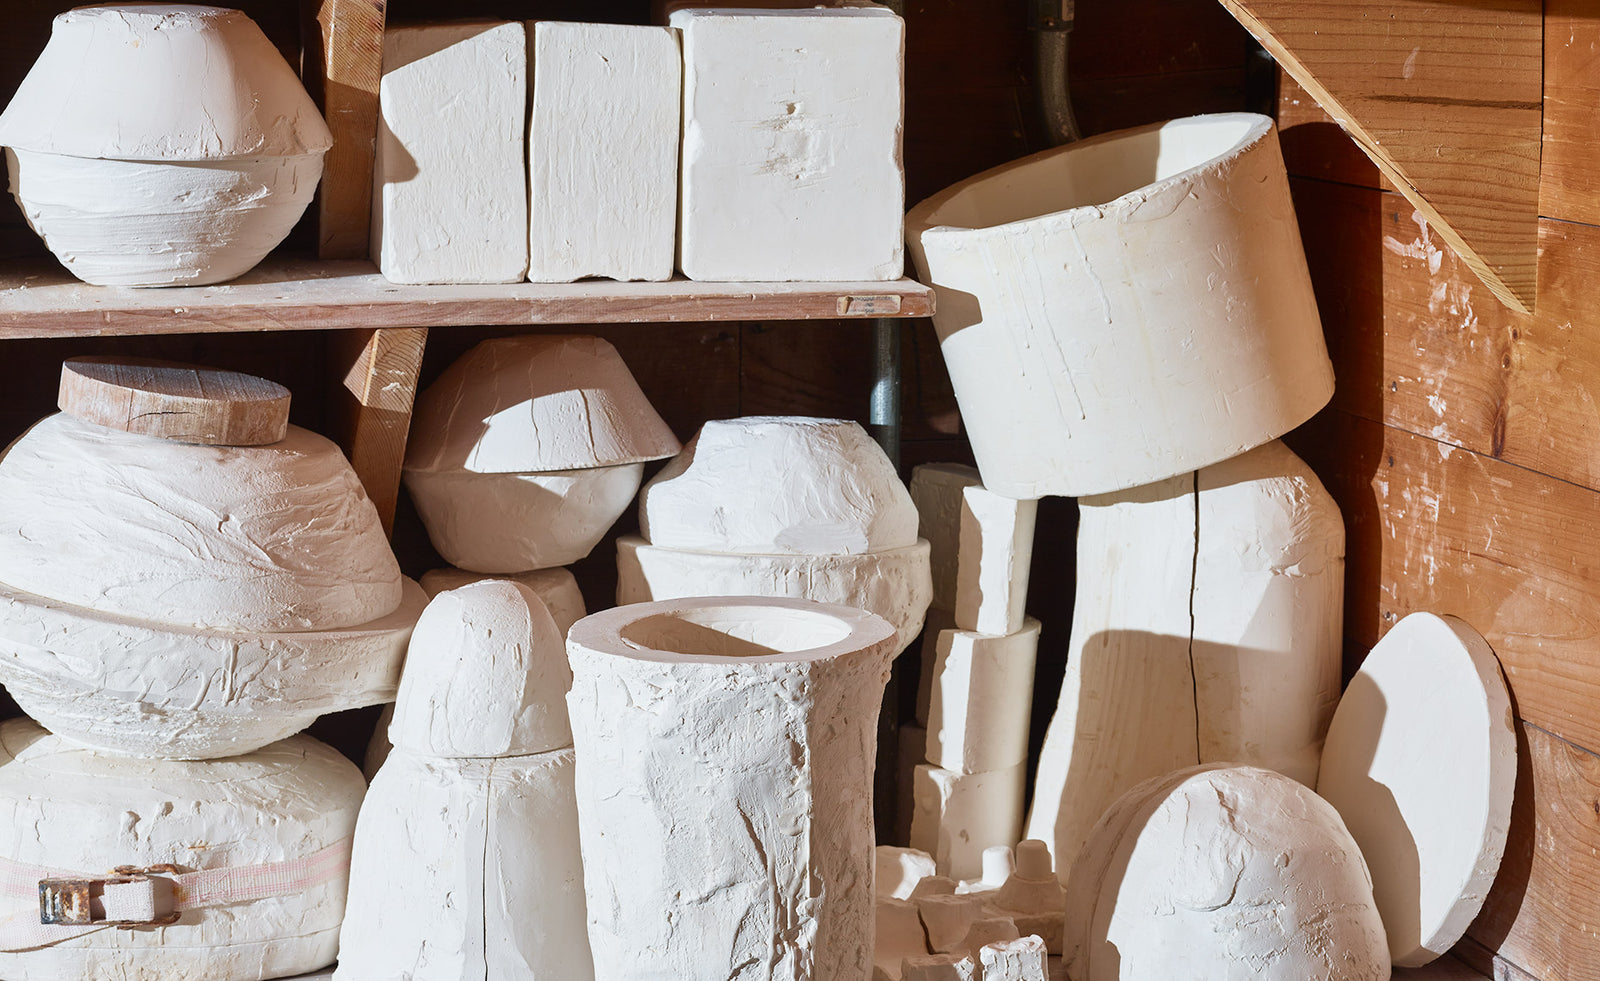 Stacks of unused plaster molds use for casting porcelain